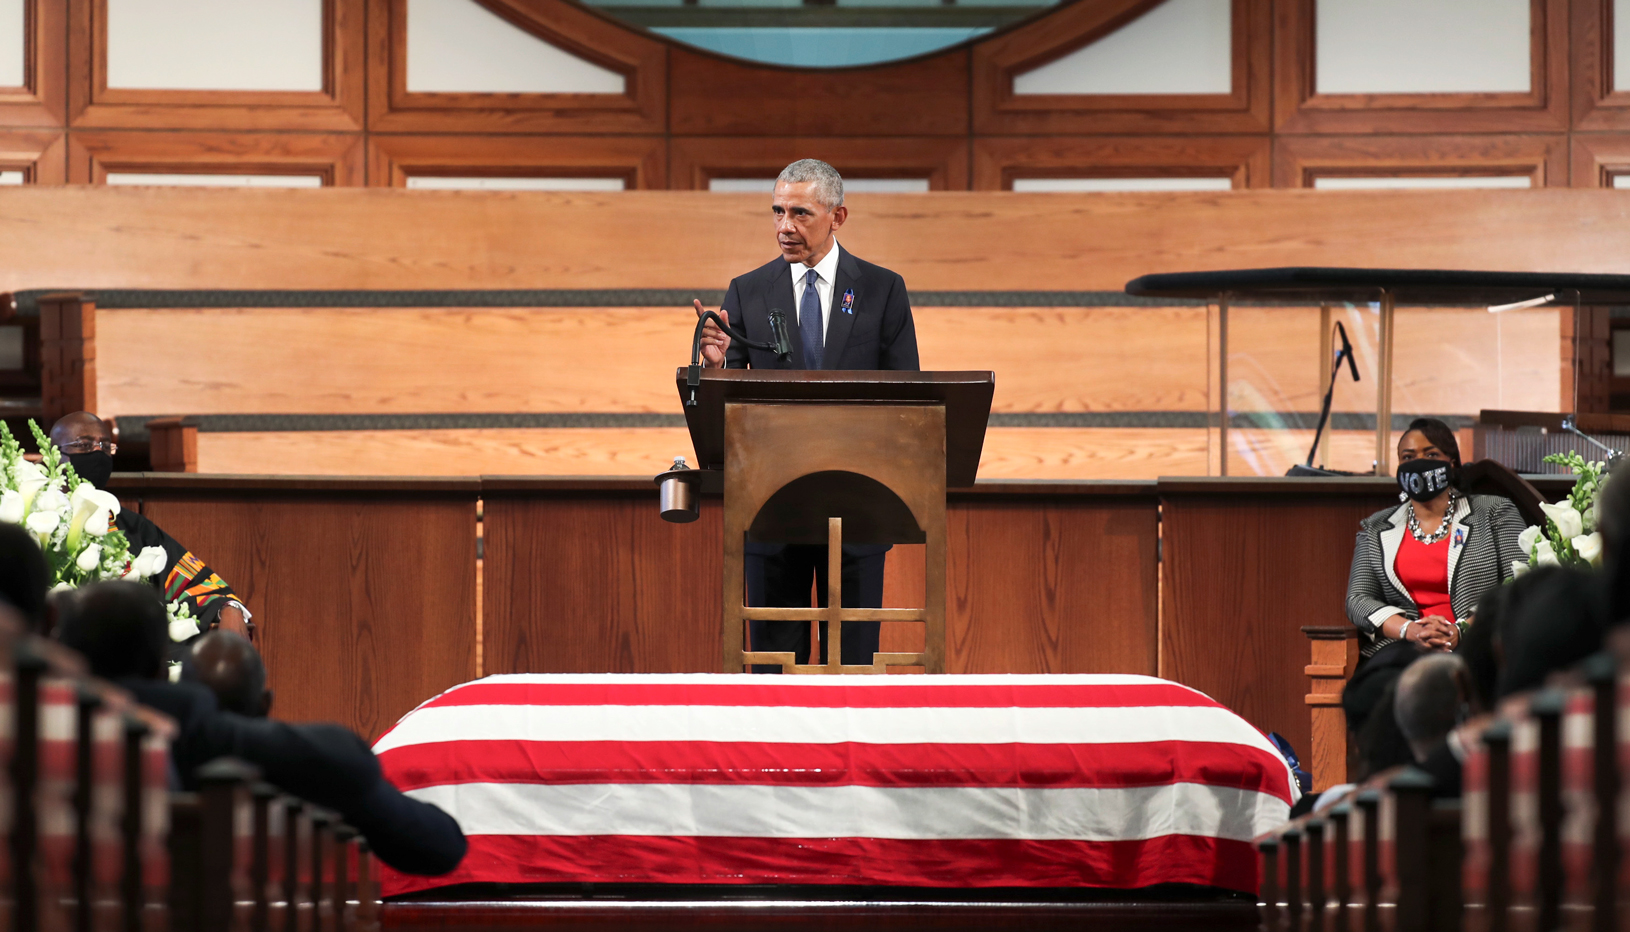 Former President Obama speaks at the funeral of Representative John Lewis